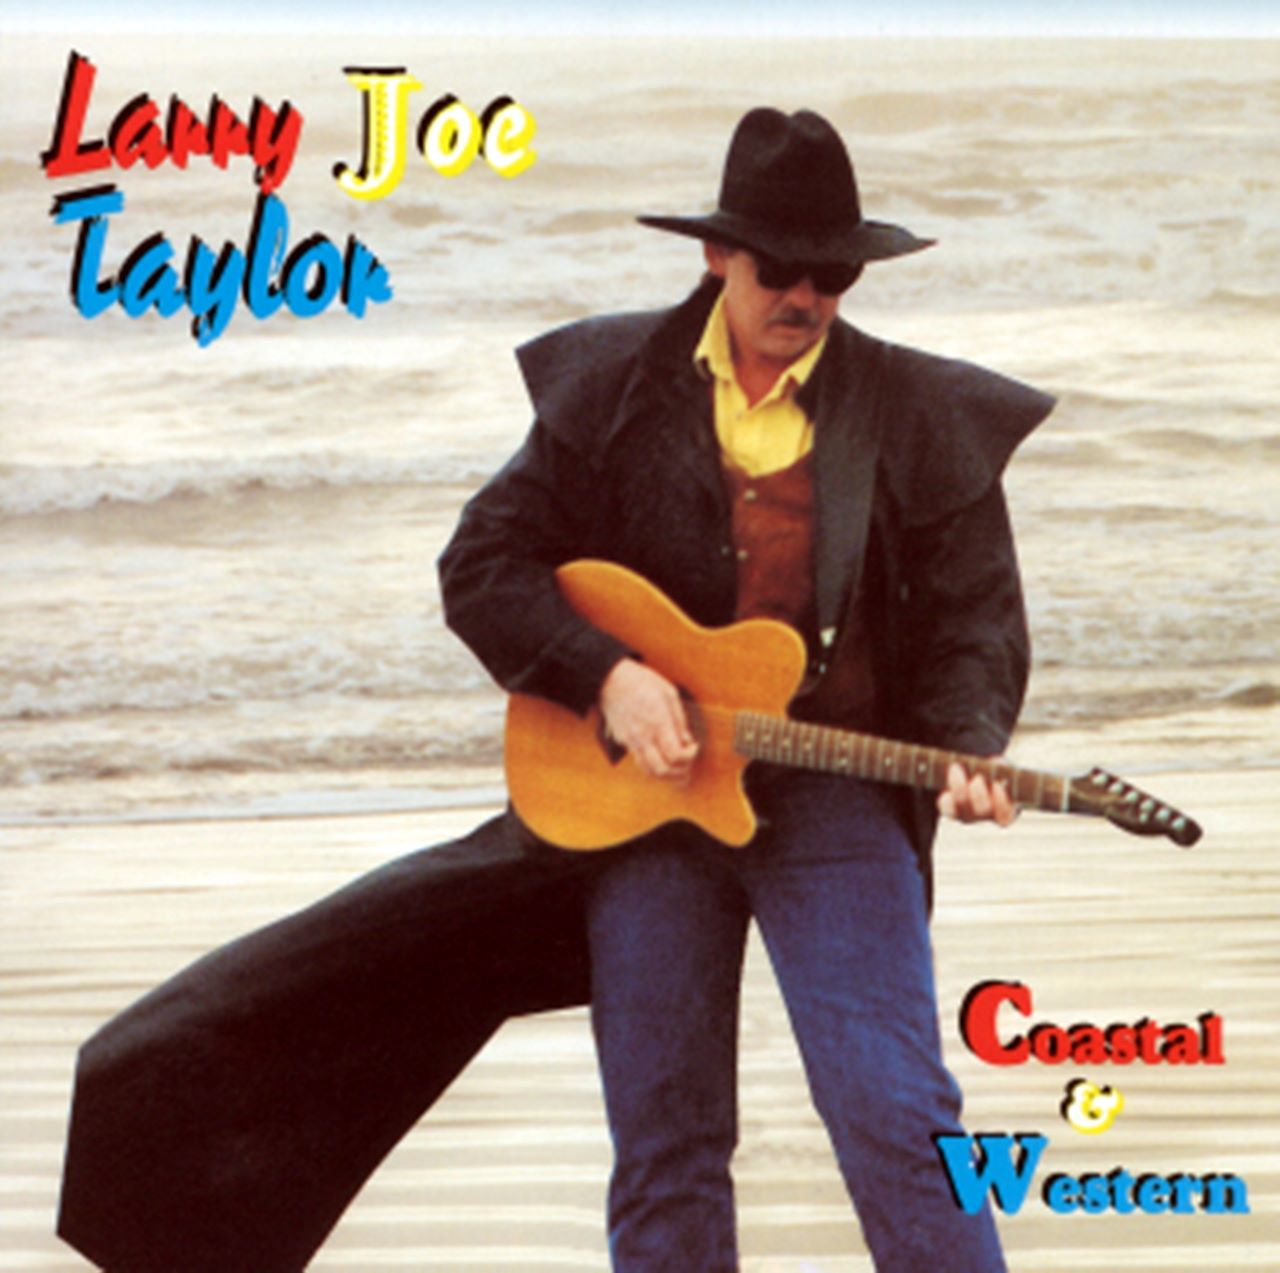 Larry Joe Taylor - Coastal & Western cover album